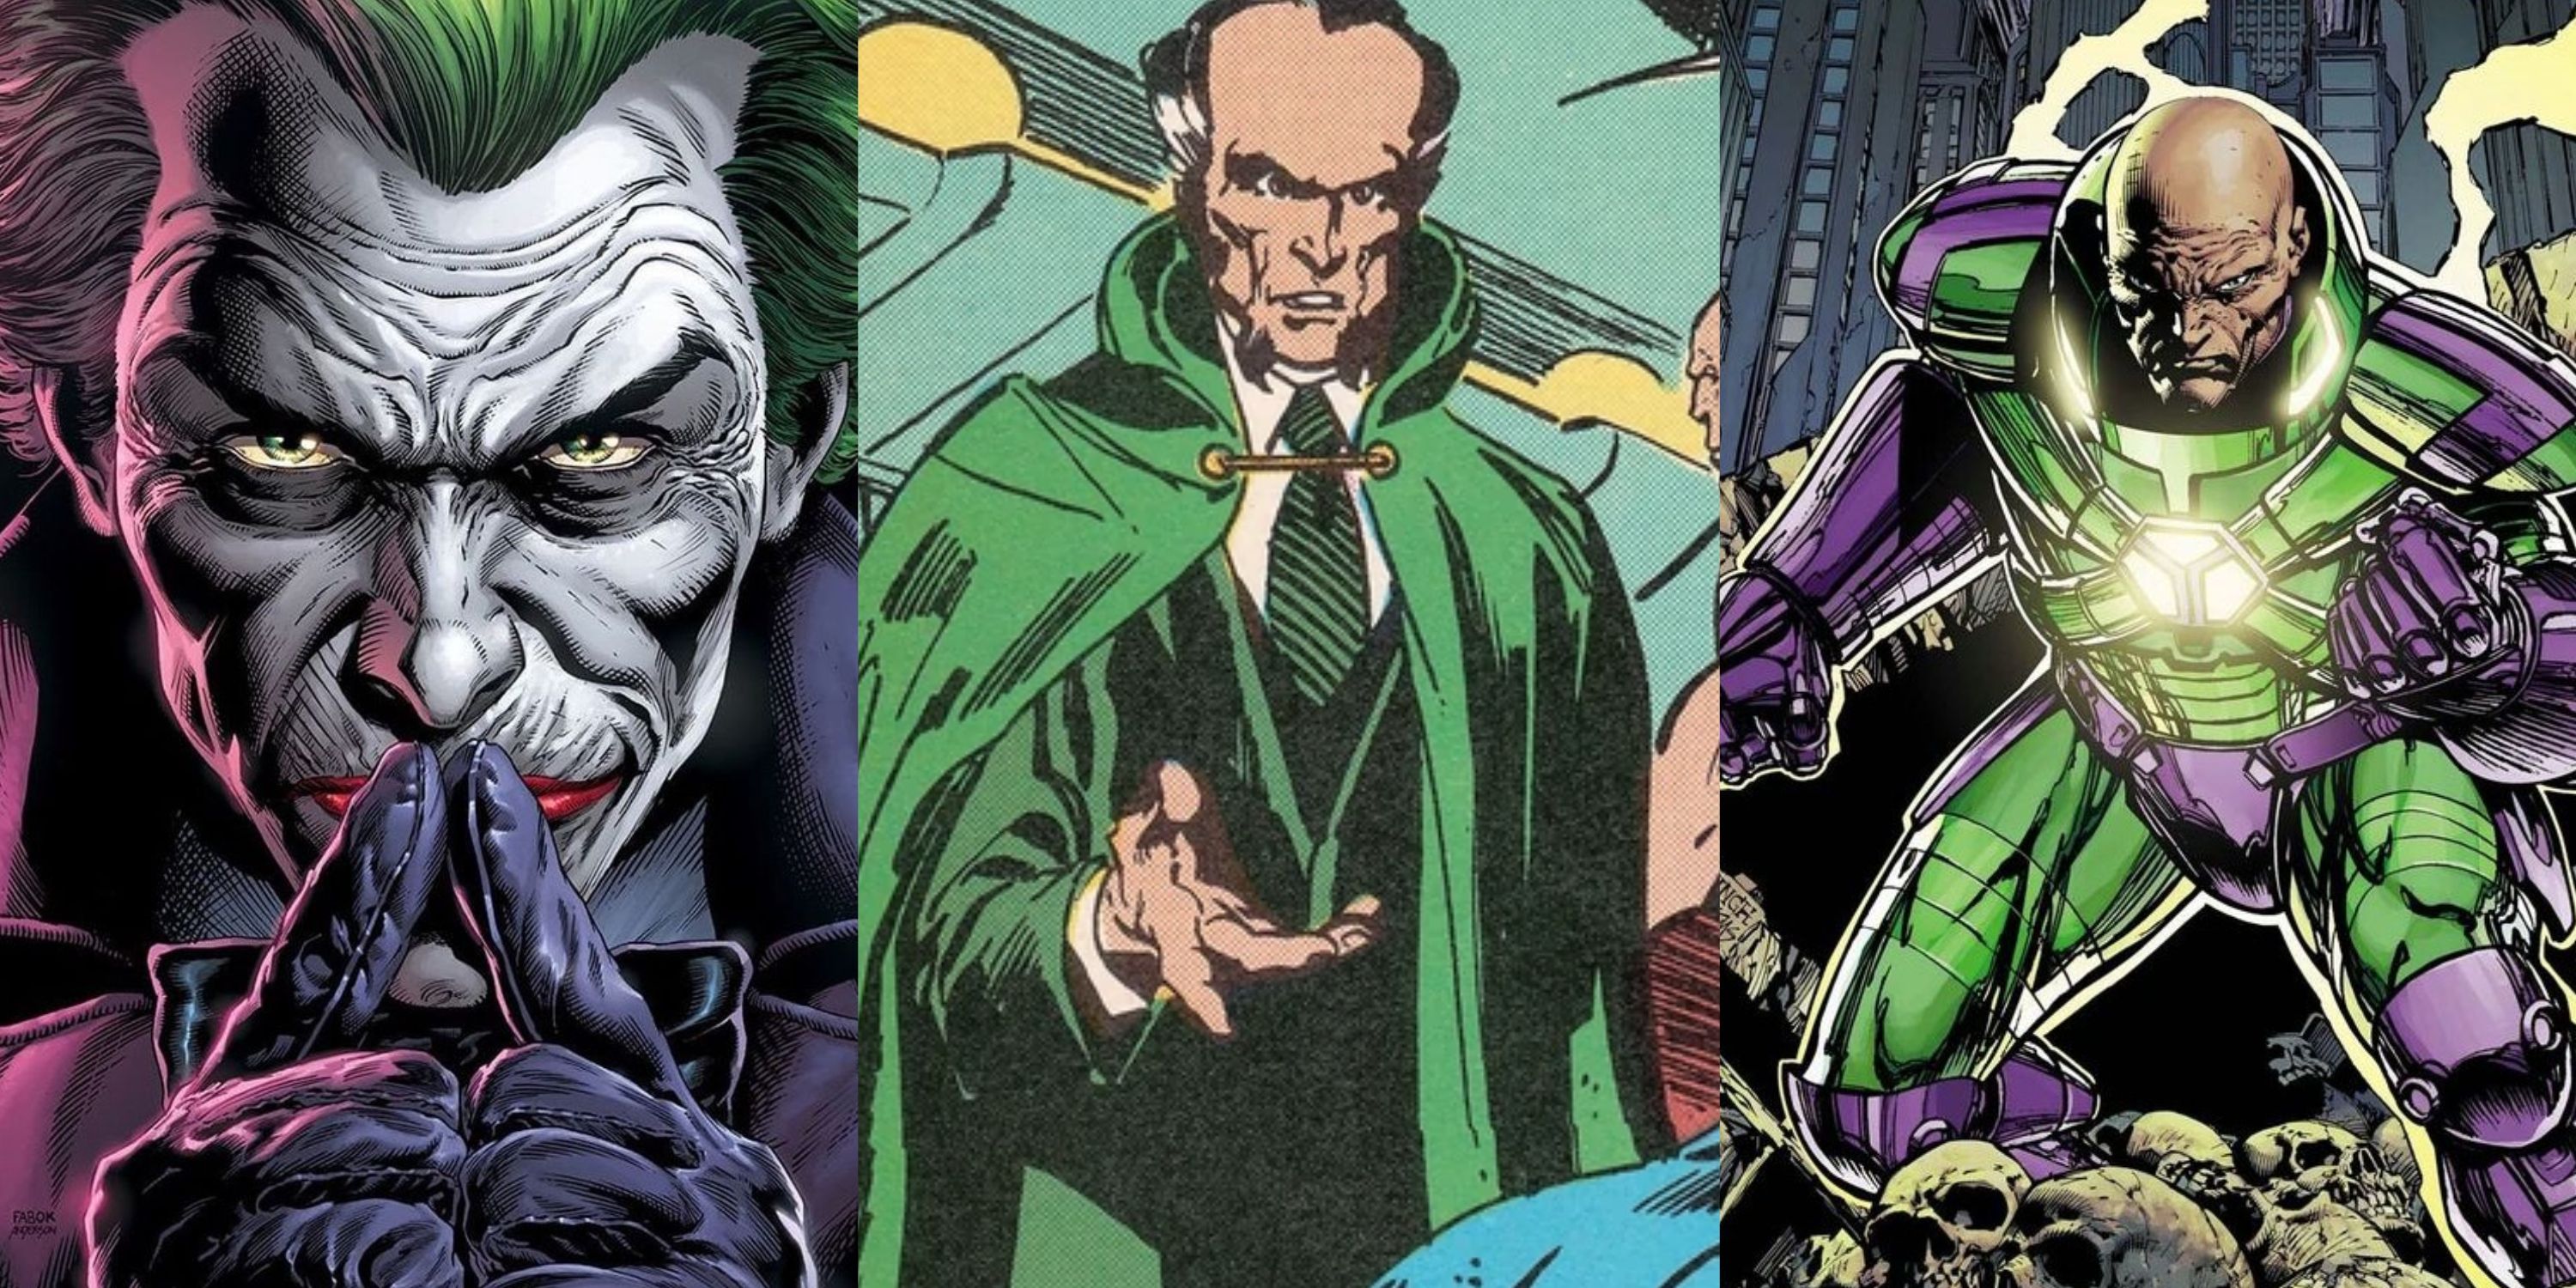 Split image of Joker from Three Jokers, Bronze Age Ra's al Ghul, Lex Luthor in green battle armor